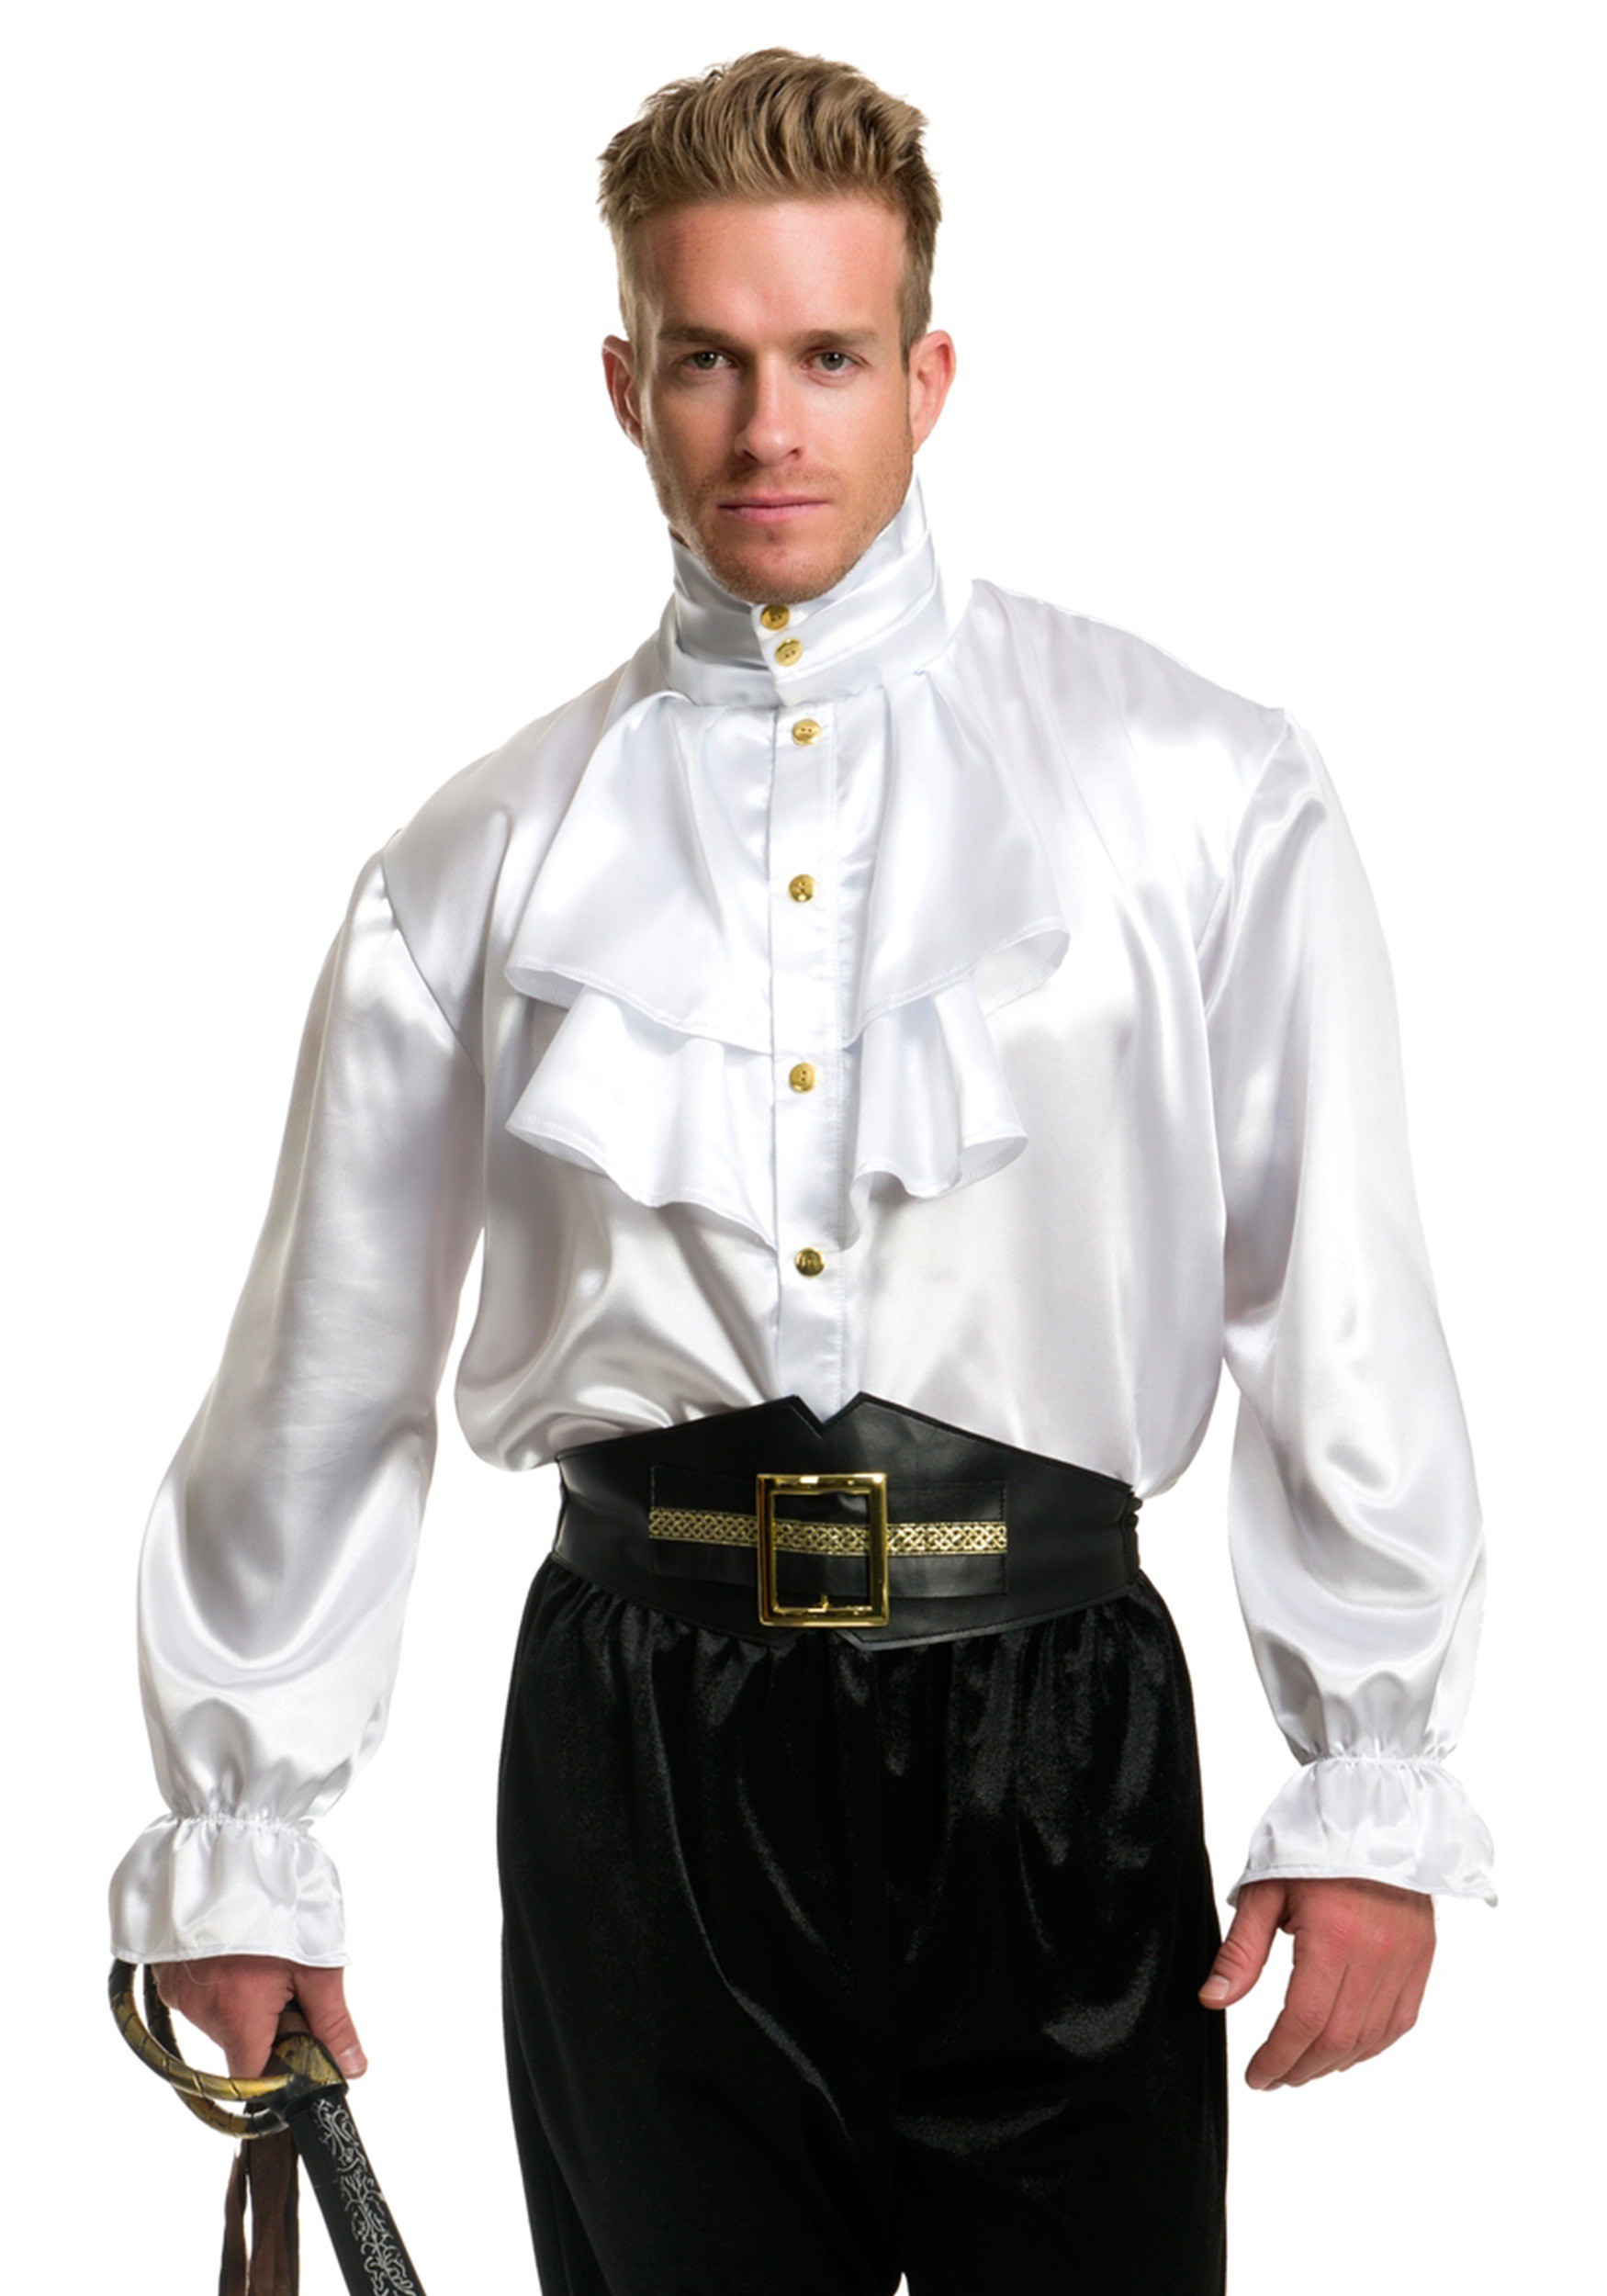 White Satin Ruffle Shirt for Men